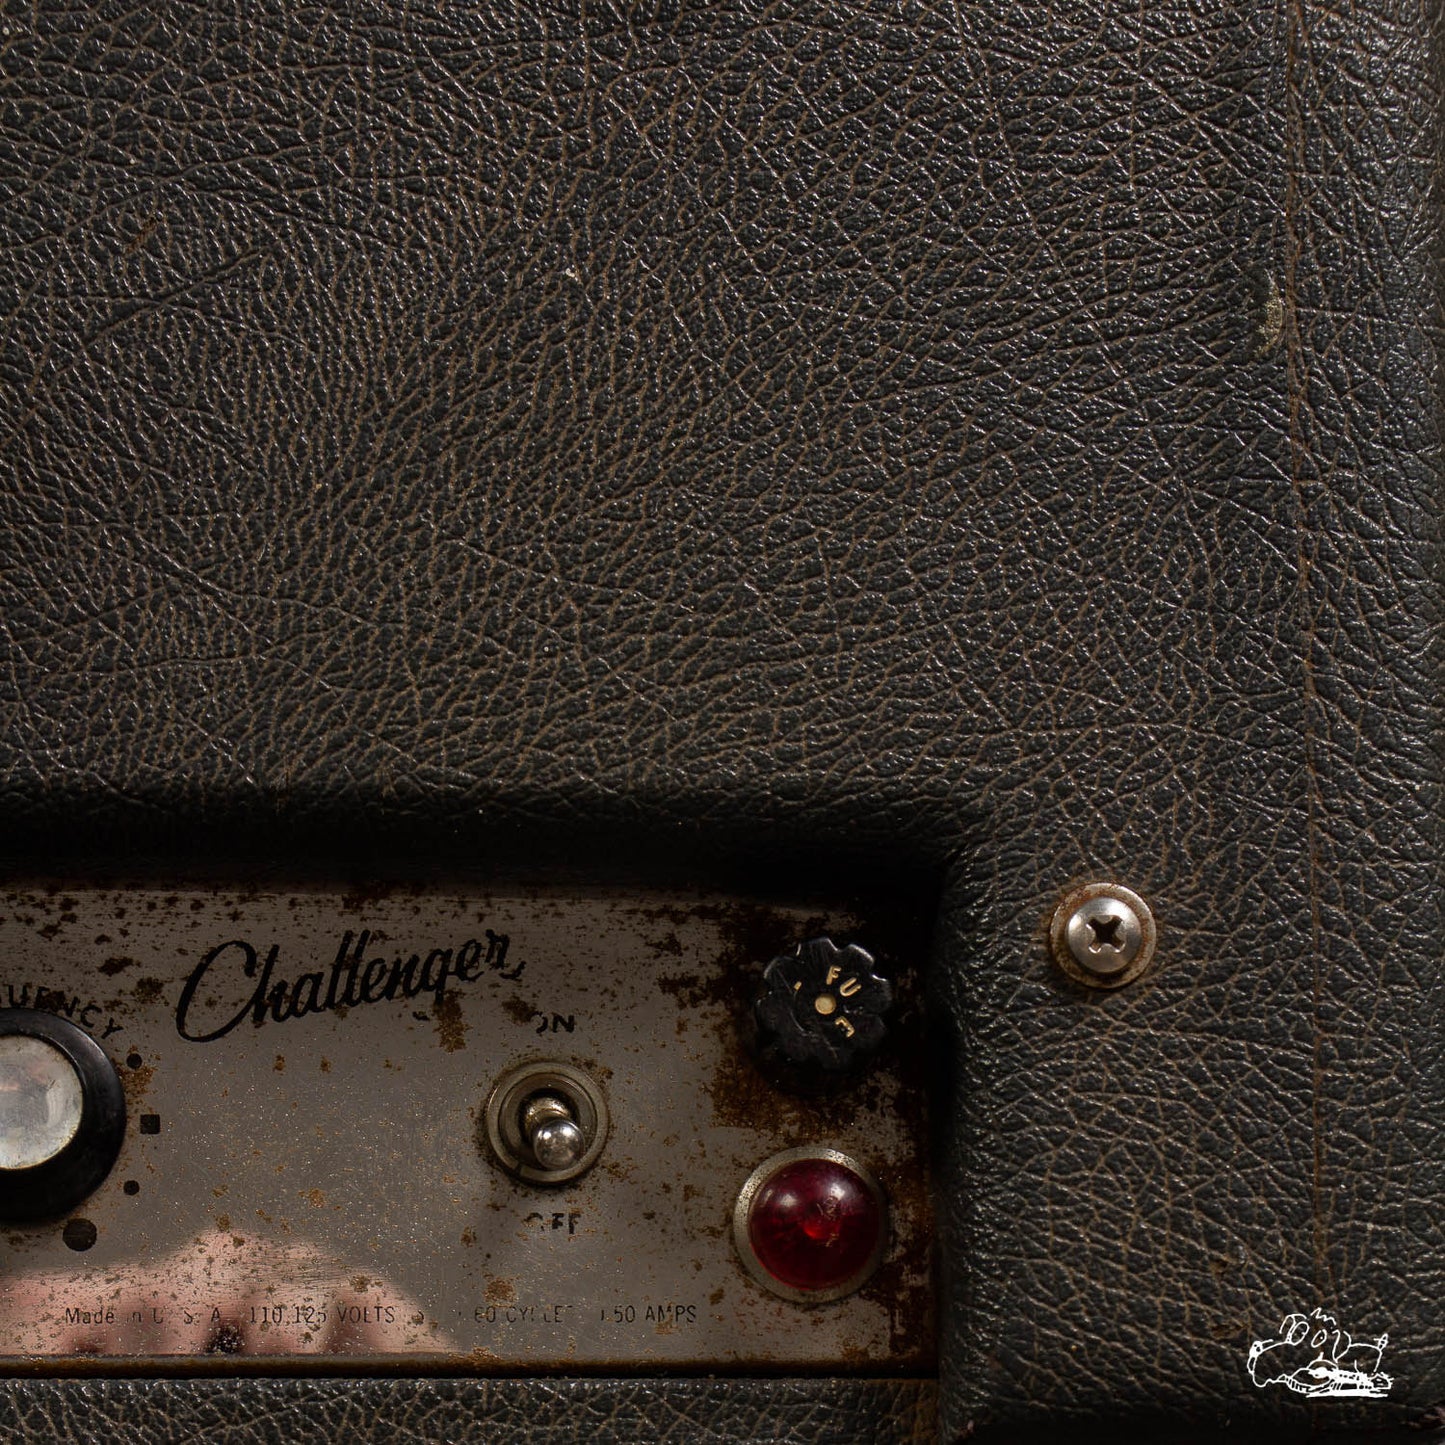 1969 Epiphone Challenger Amplifier